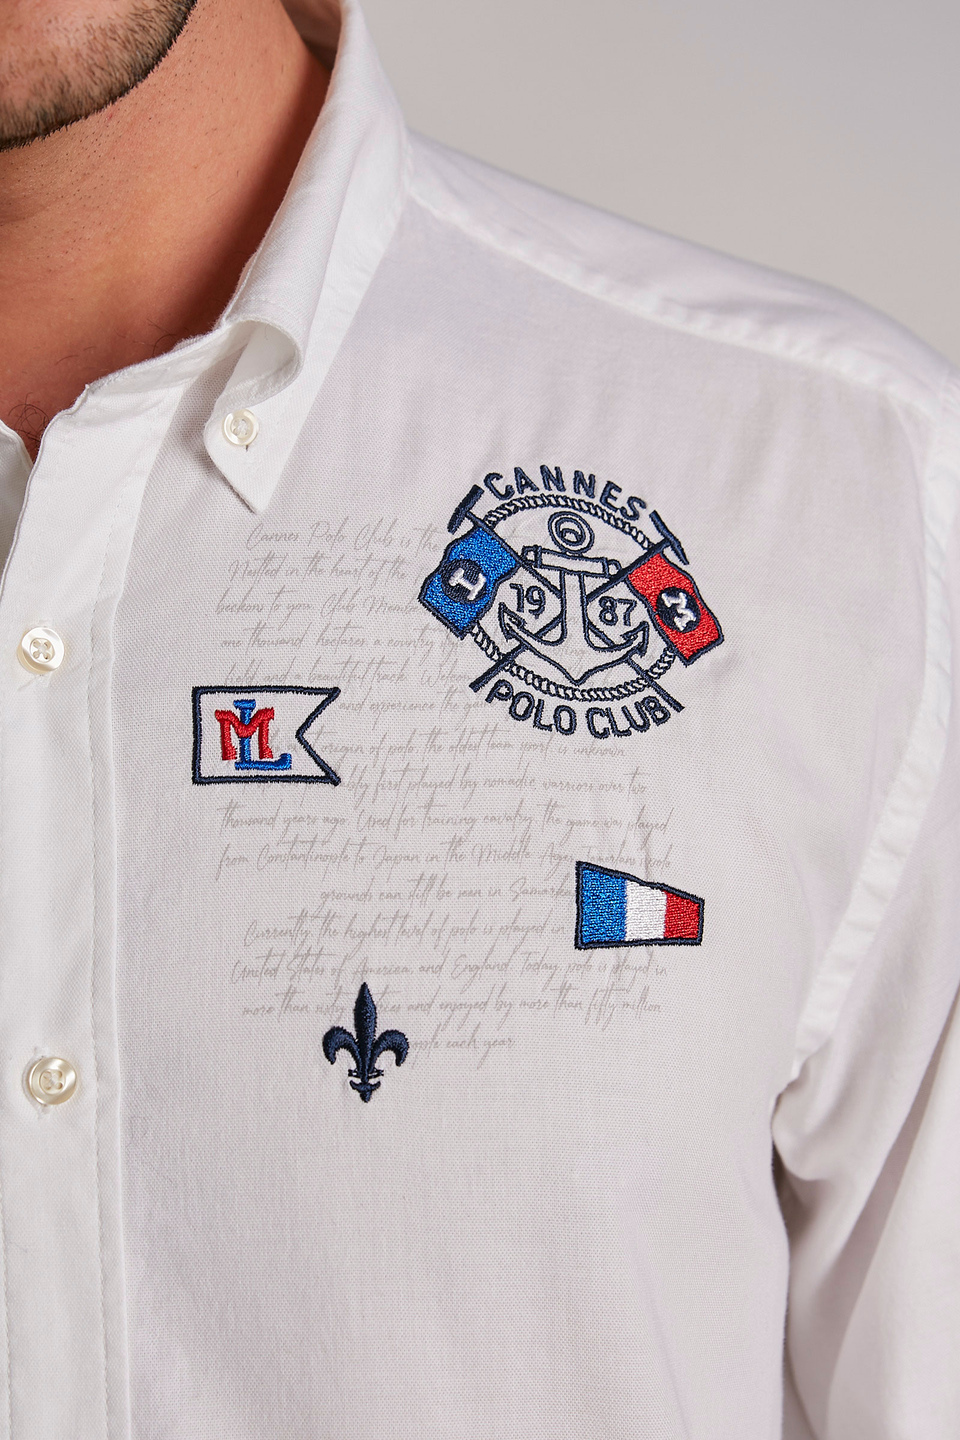 Men's long-sleeved regular-fit cotton shirt | La Martina - Official Online Shop